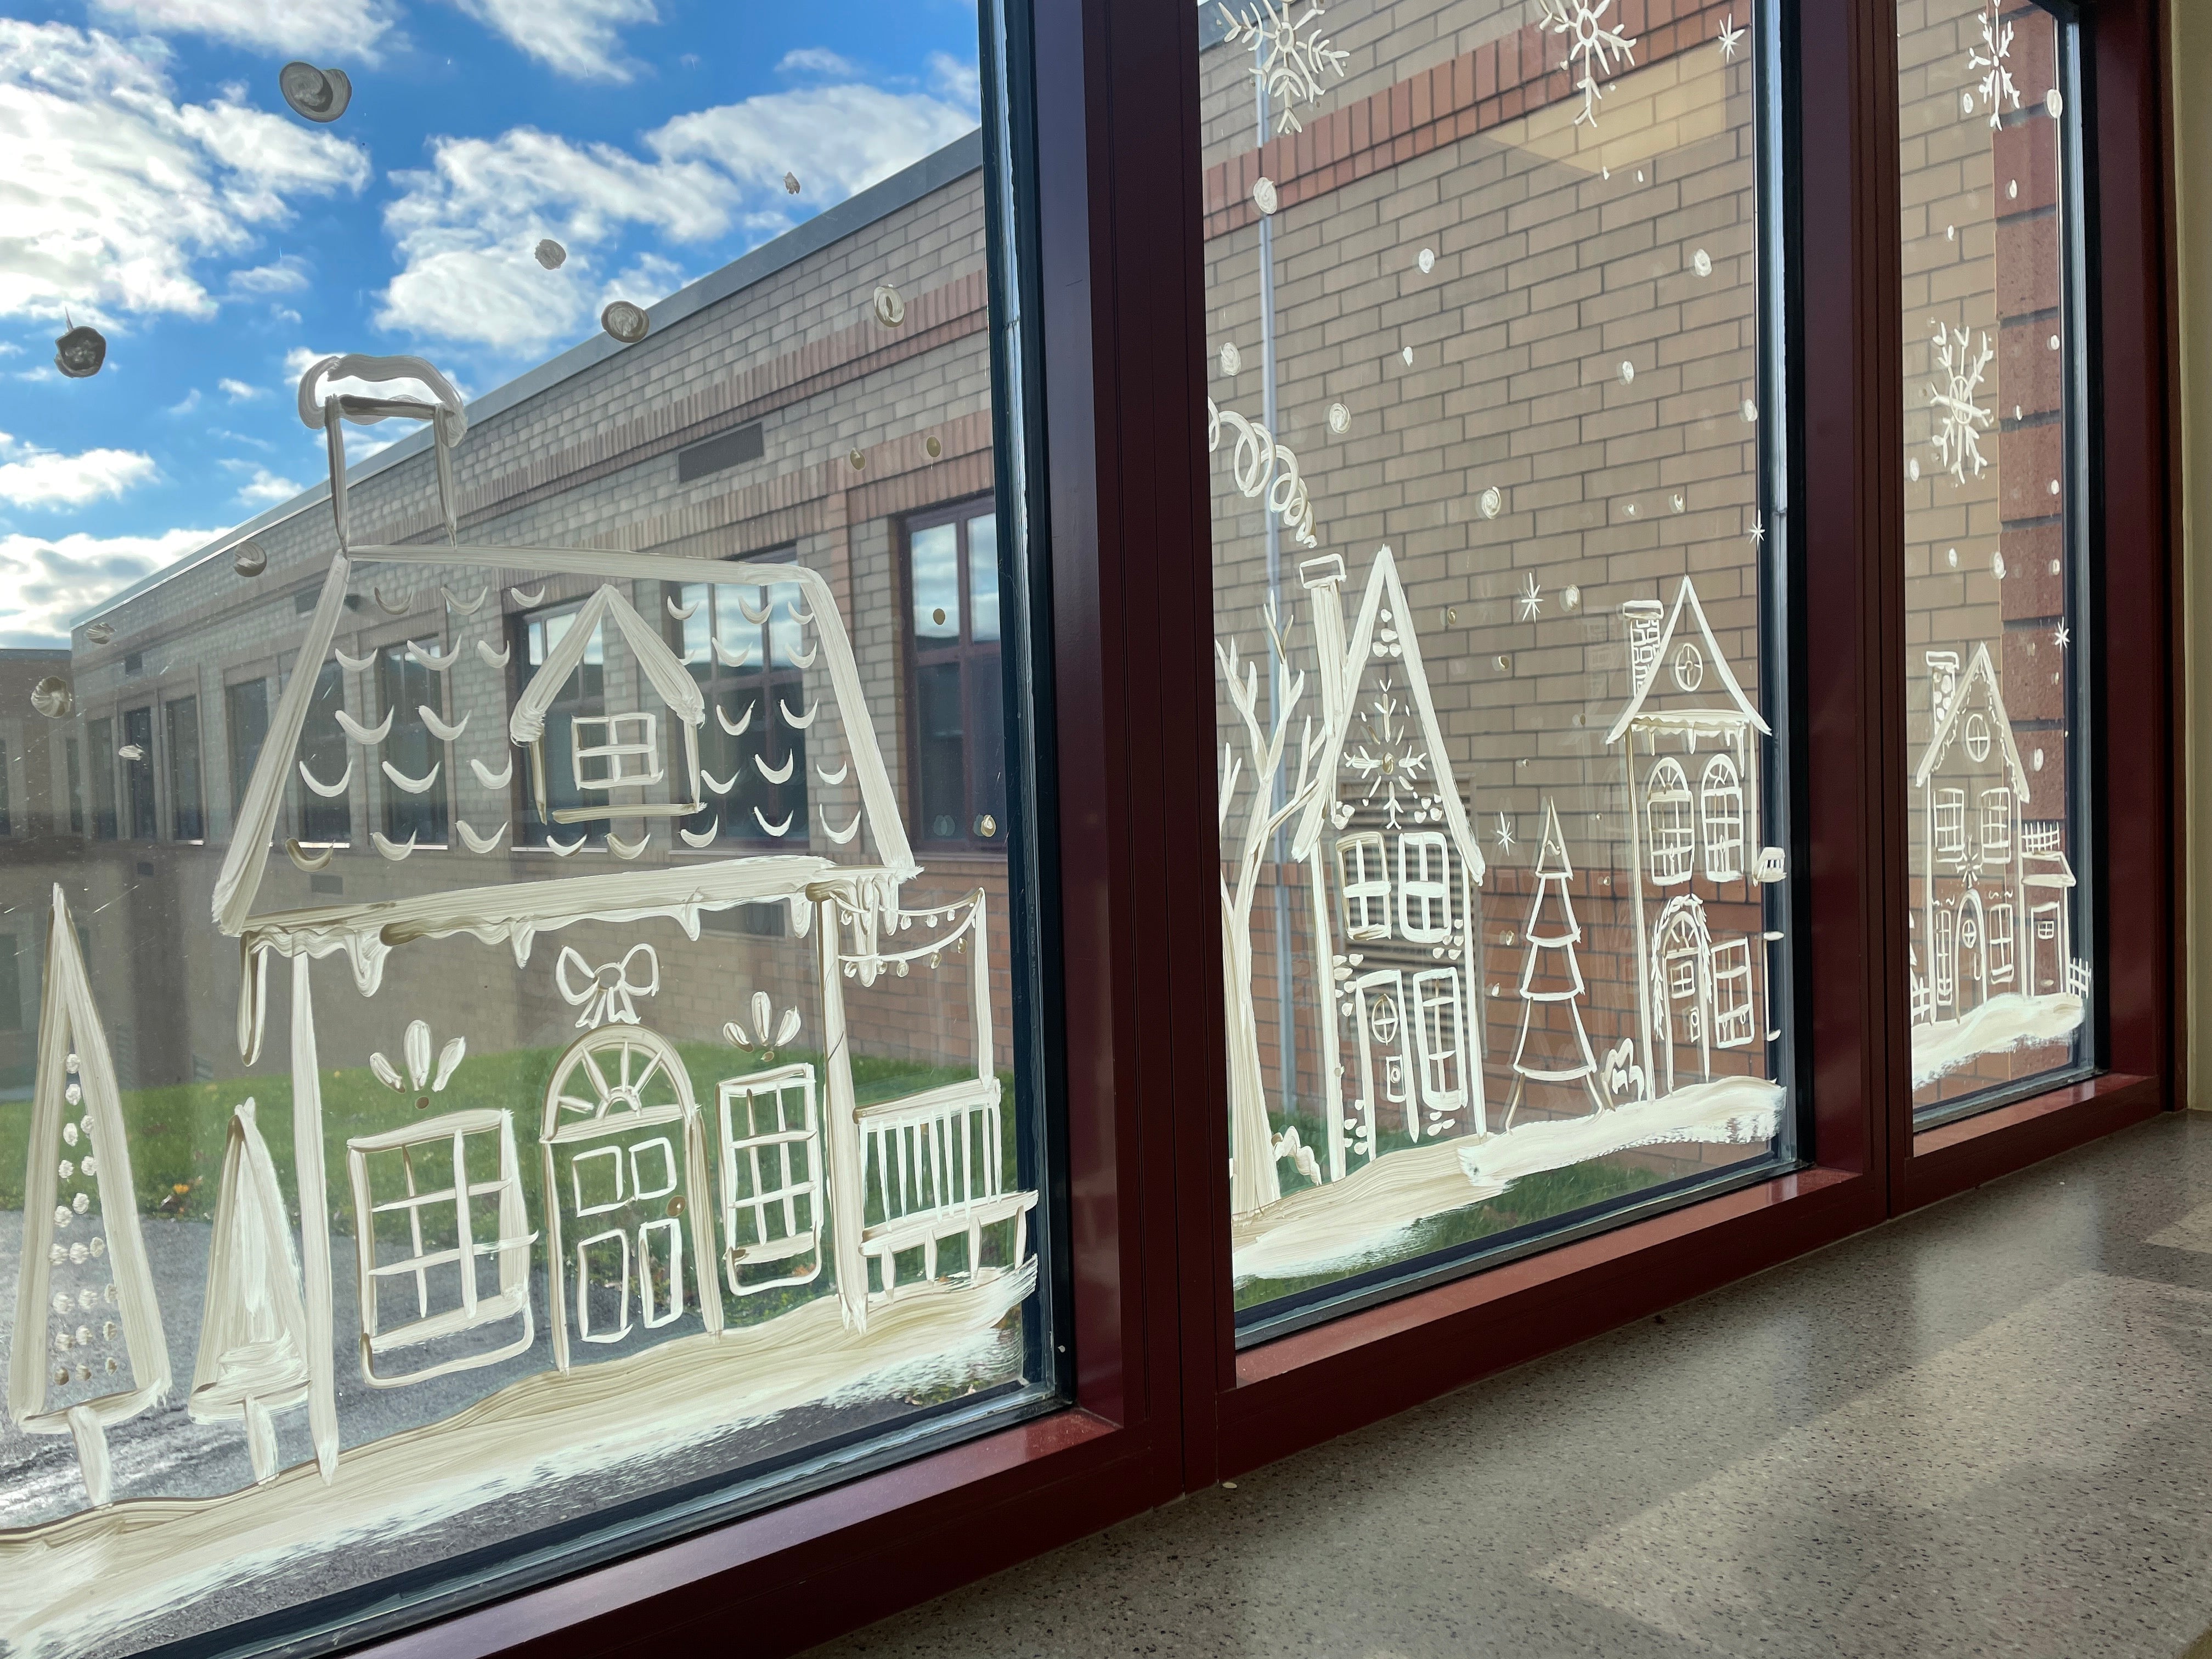 DIY Window Paint  Window painting, Diy window, Christmas window painting